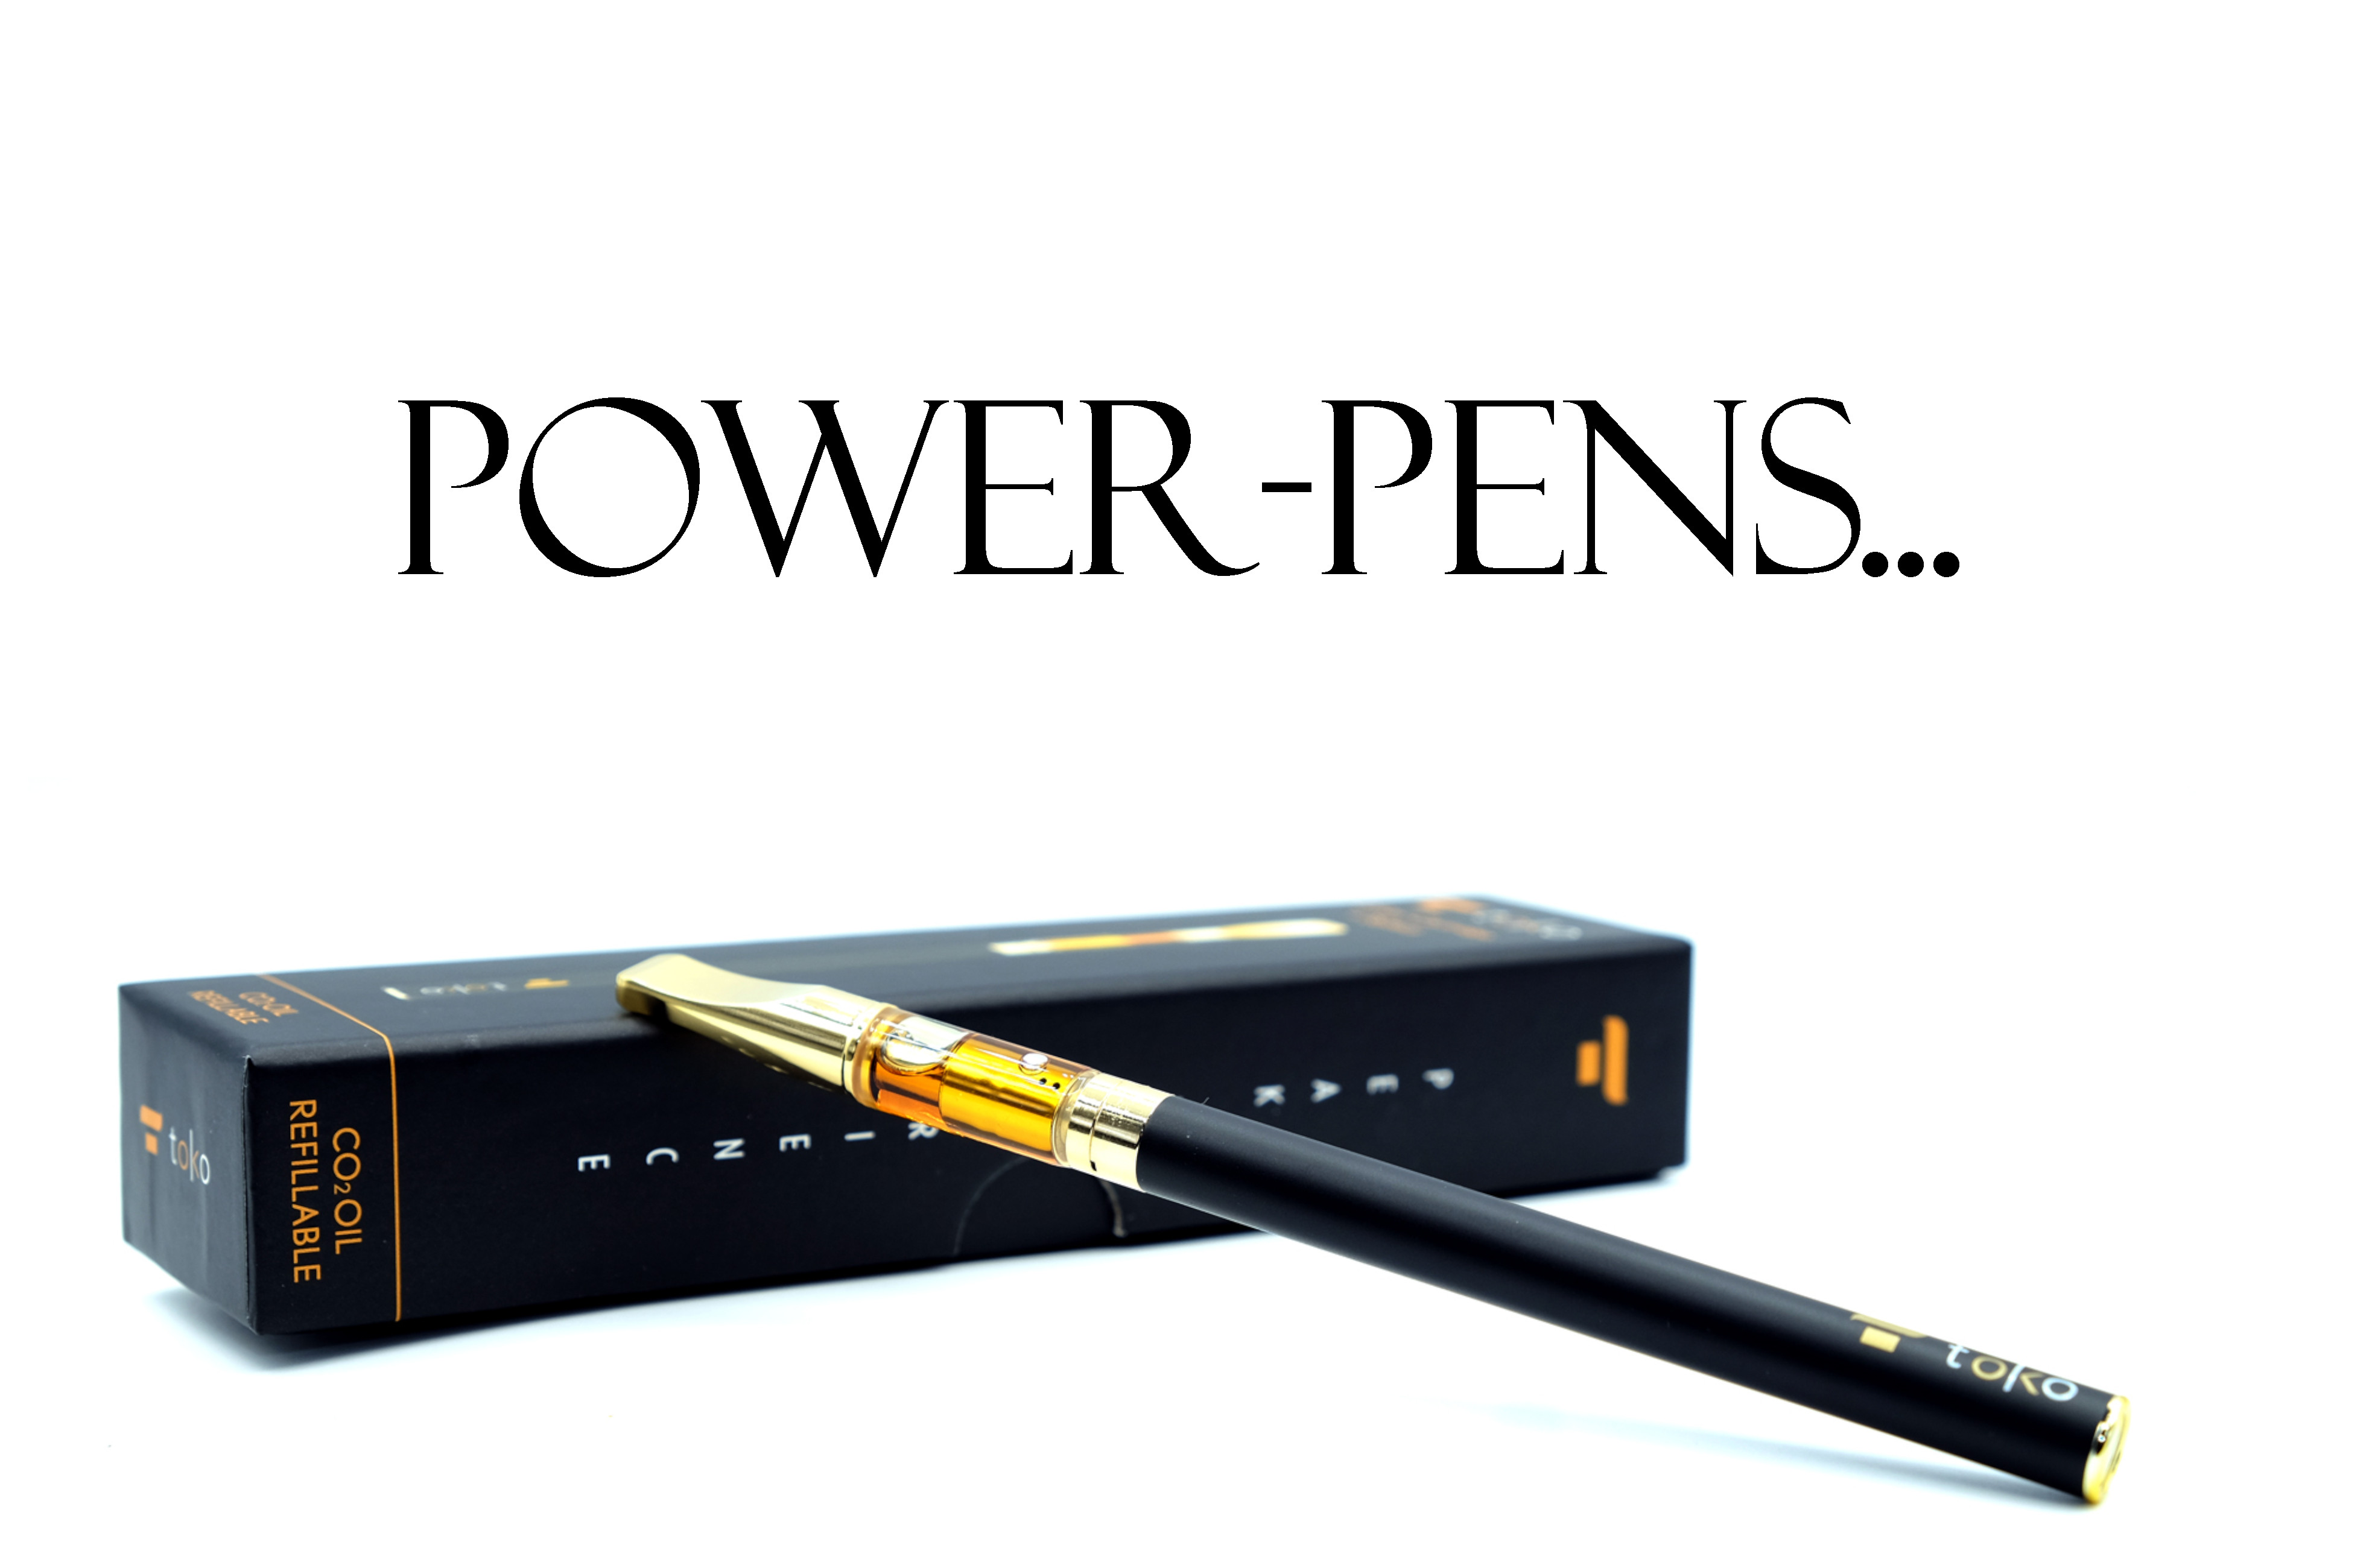 Power pens